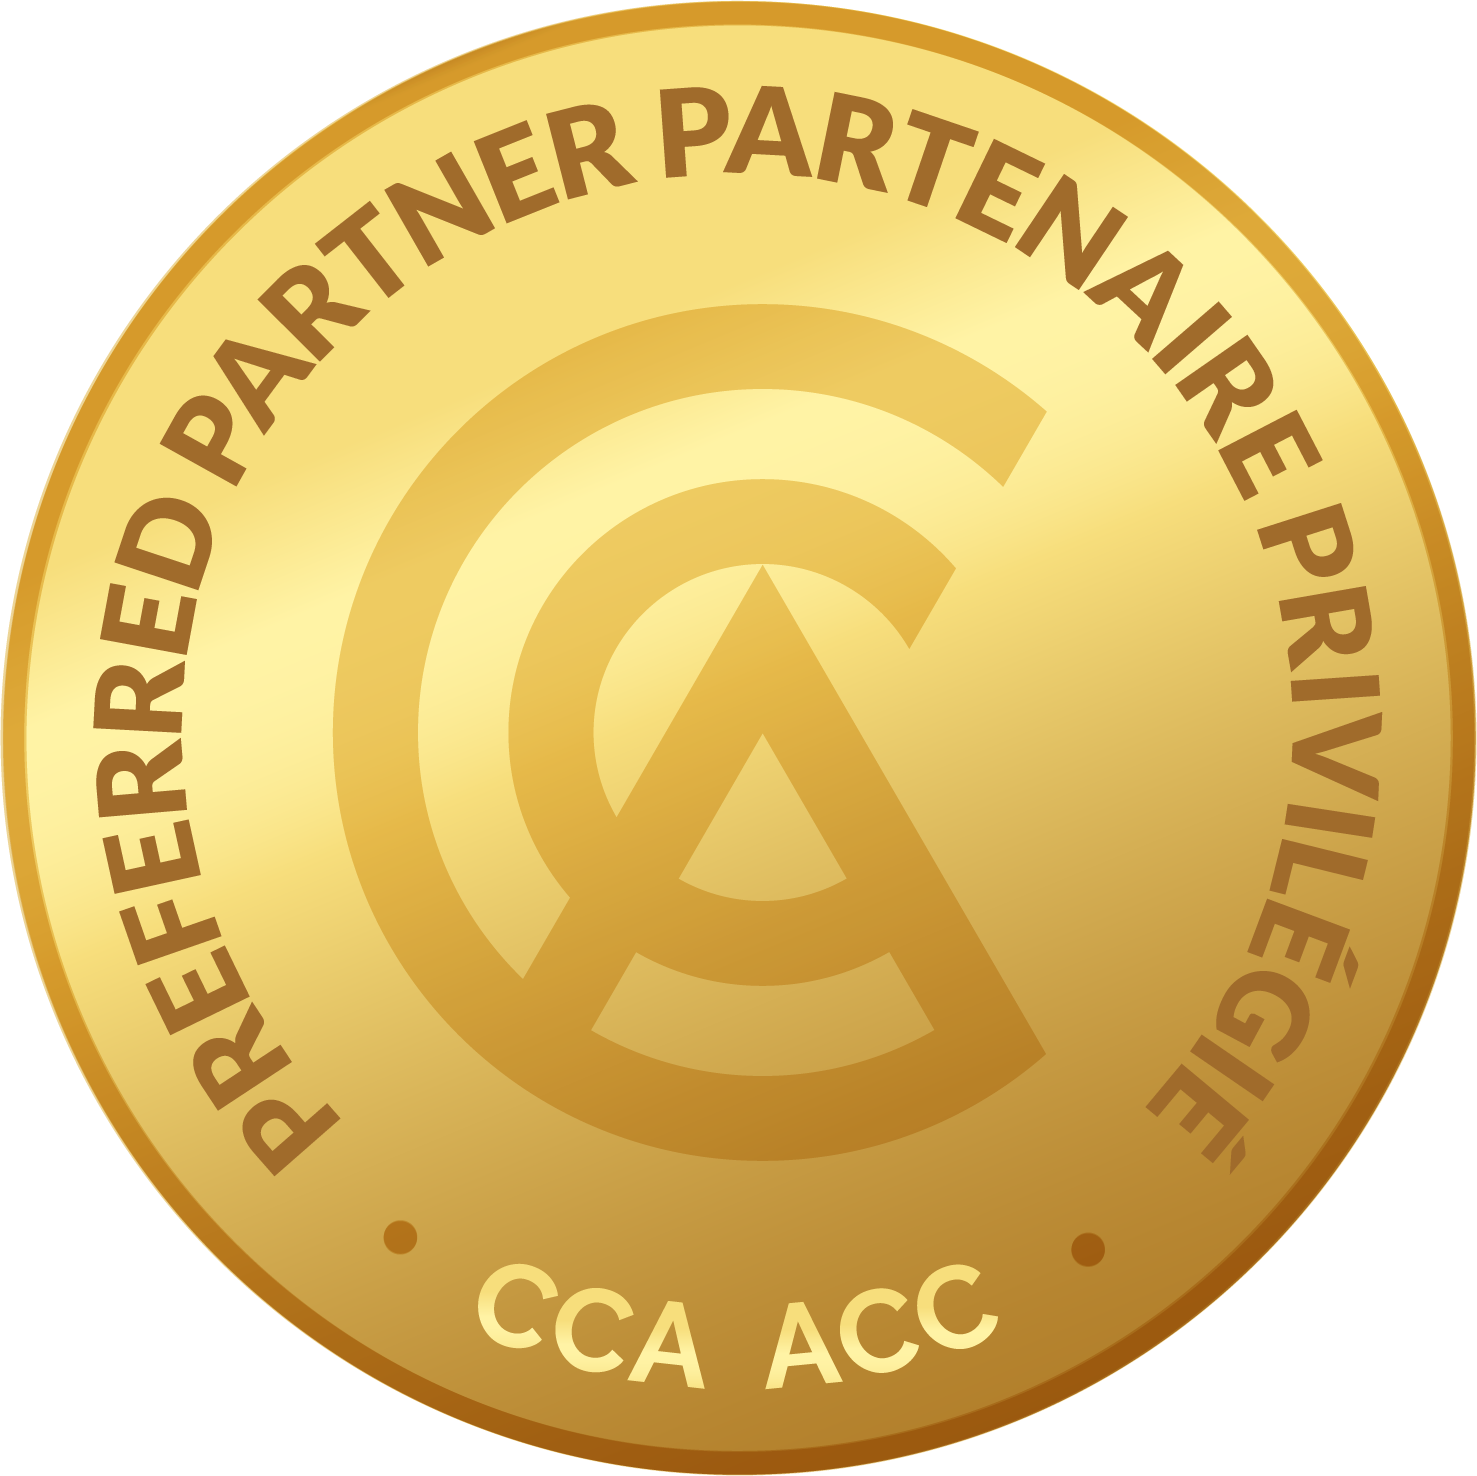 Gold Seal Preferred Partner logo